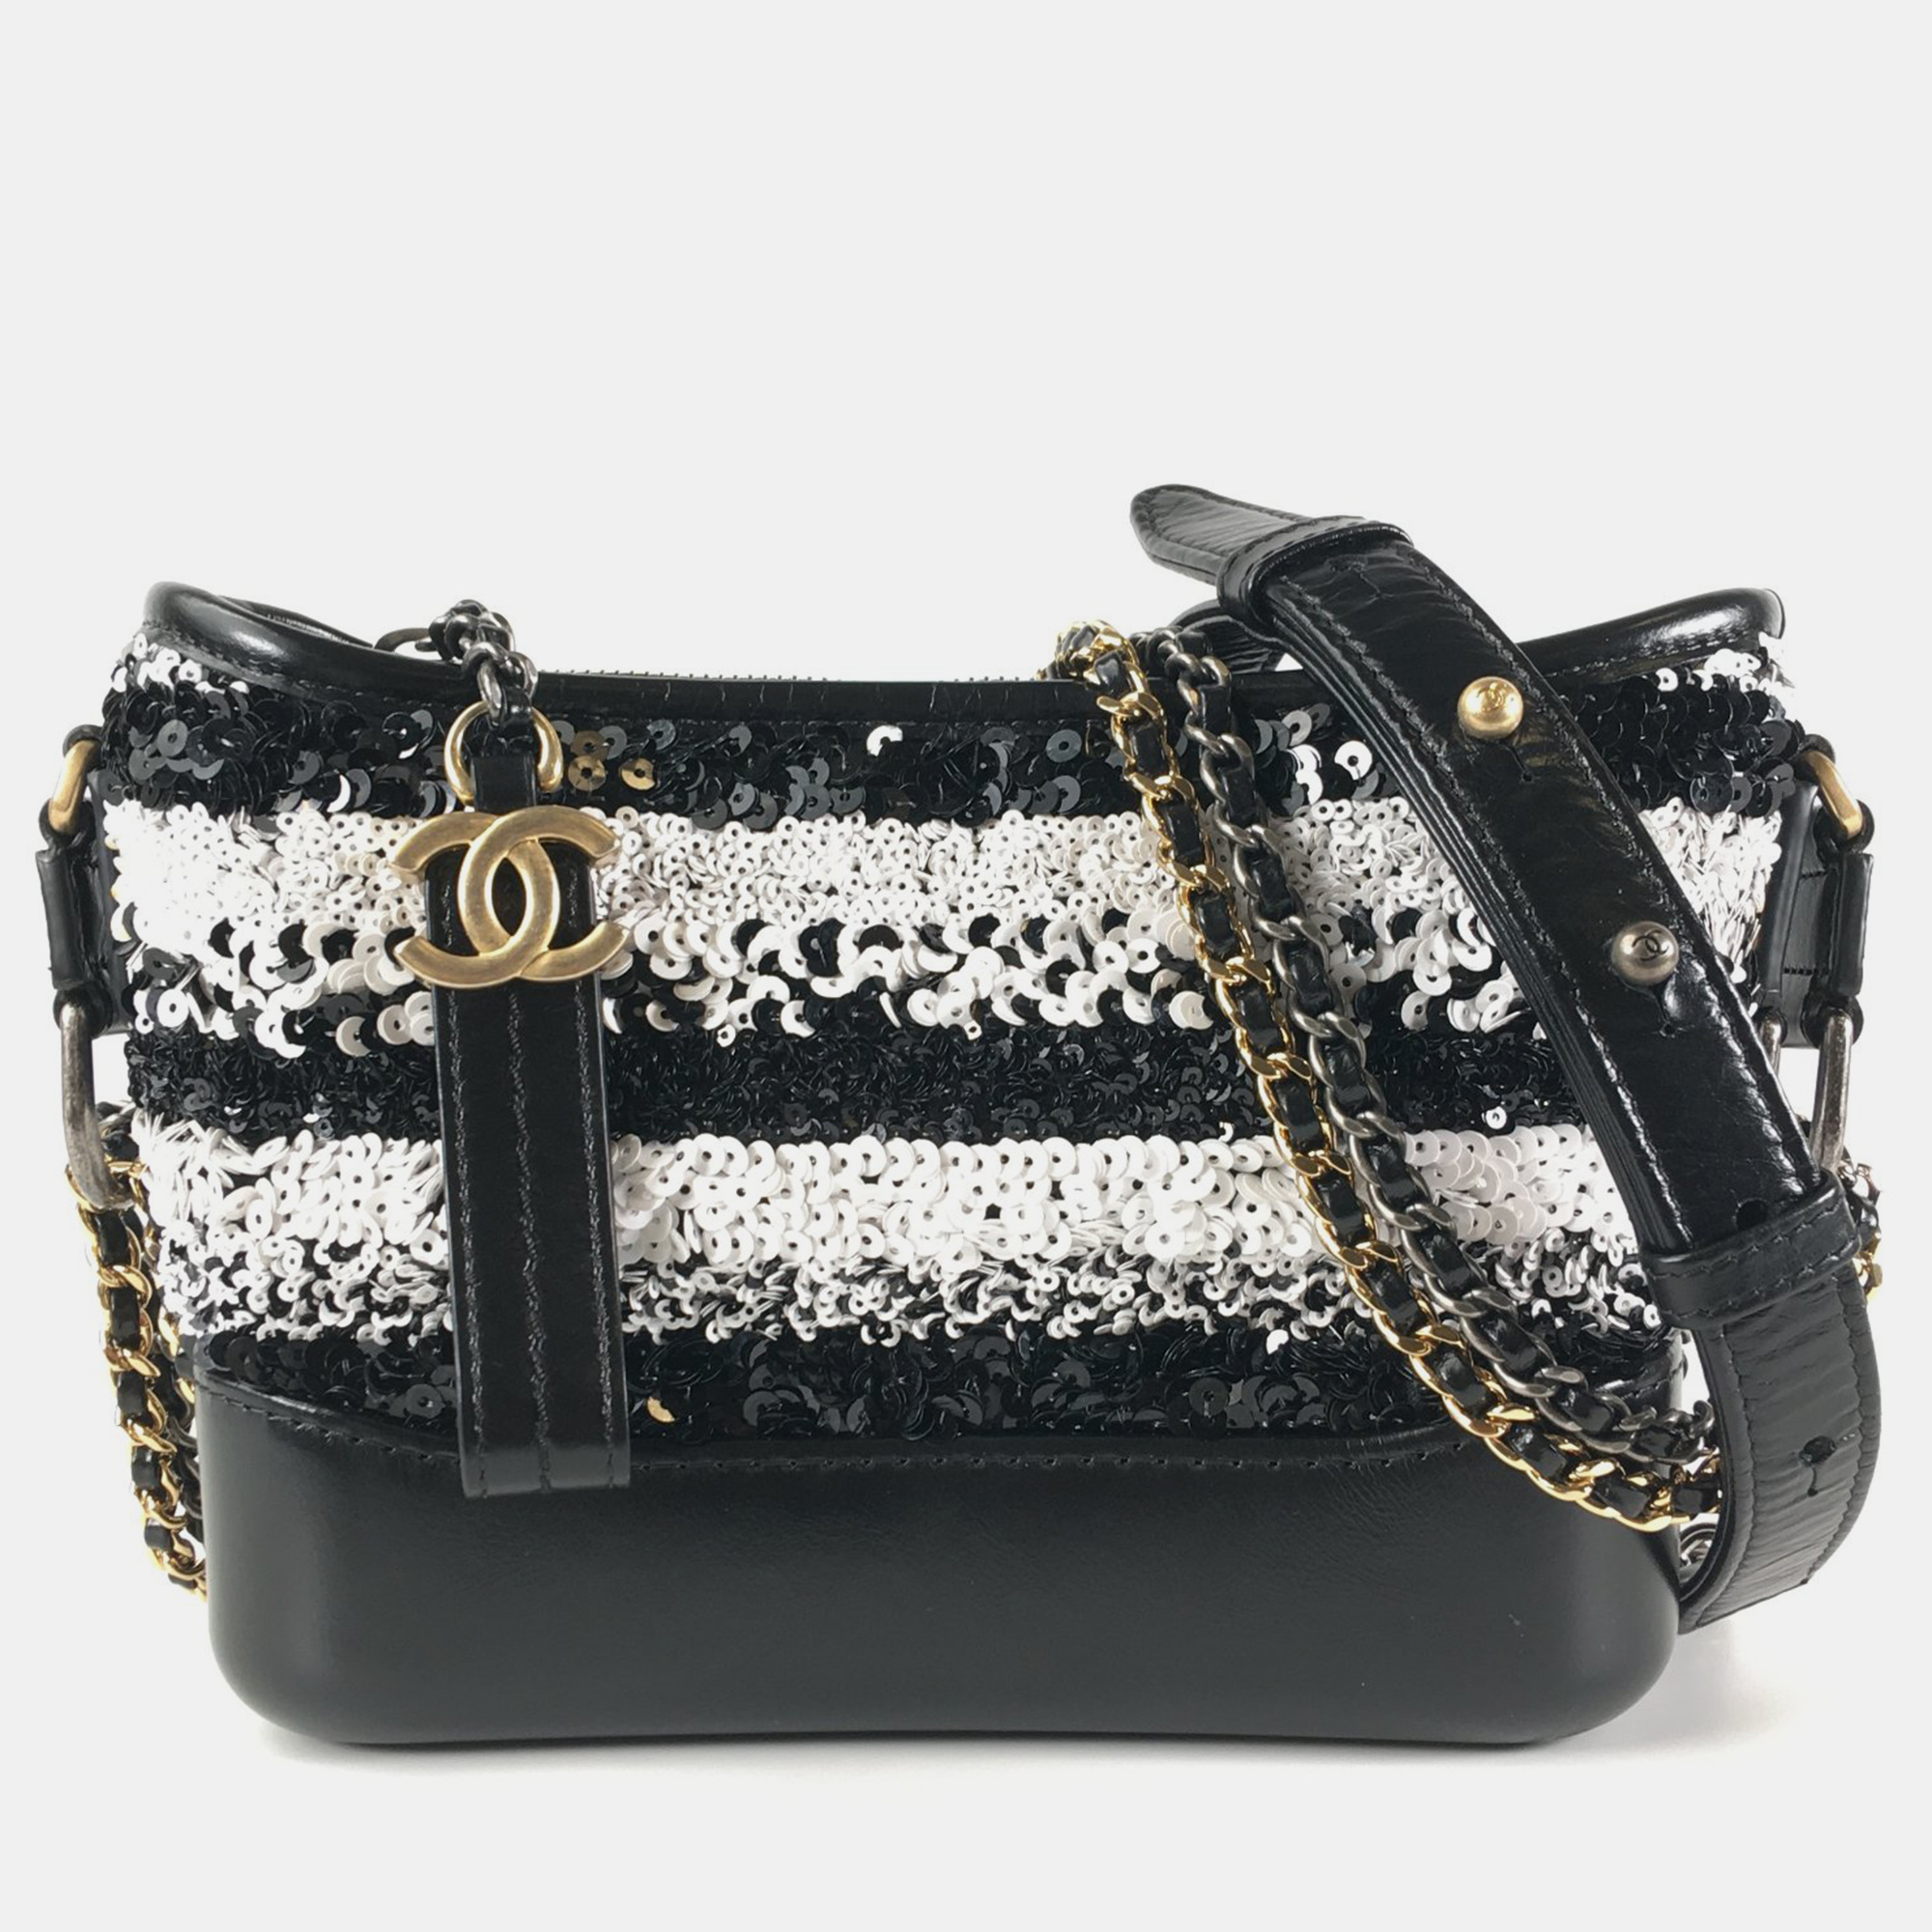 Chanel white/black leather small gabrielle shoulder bag